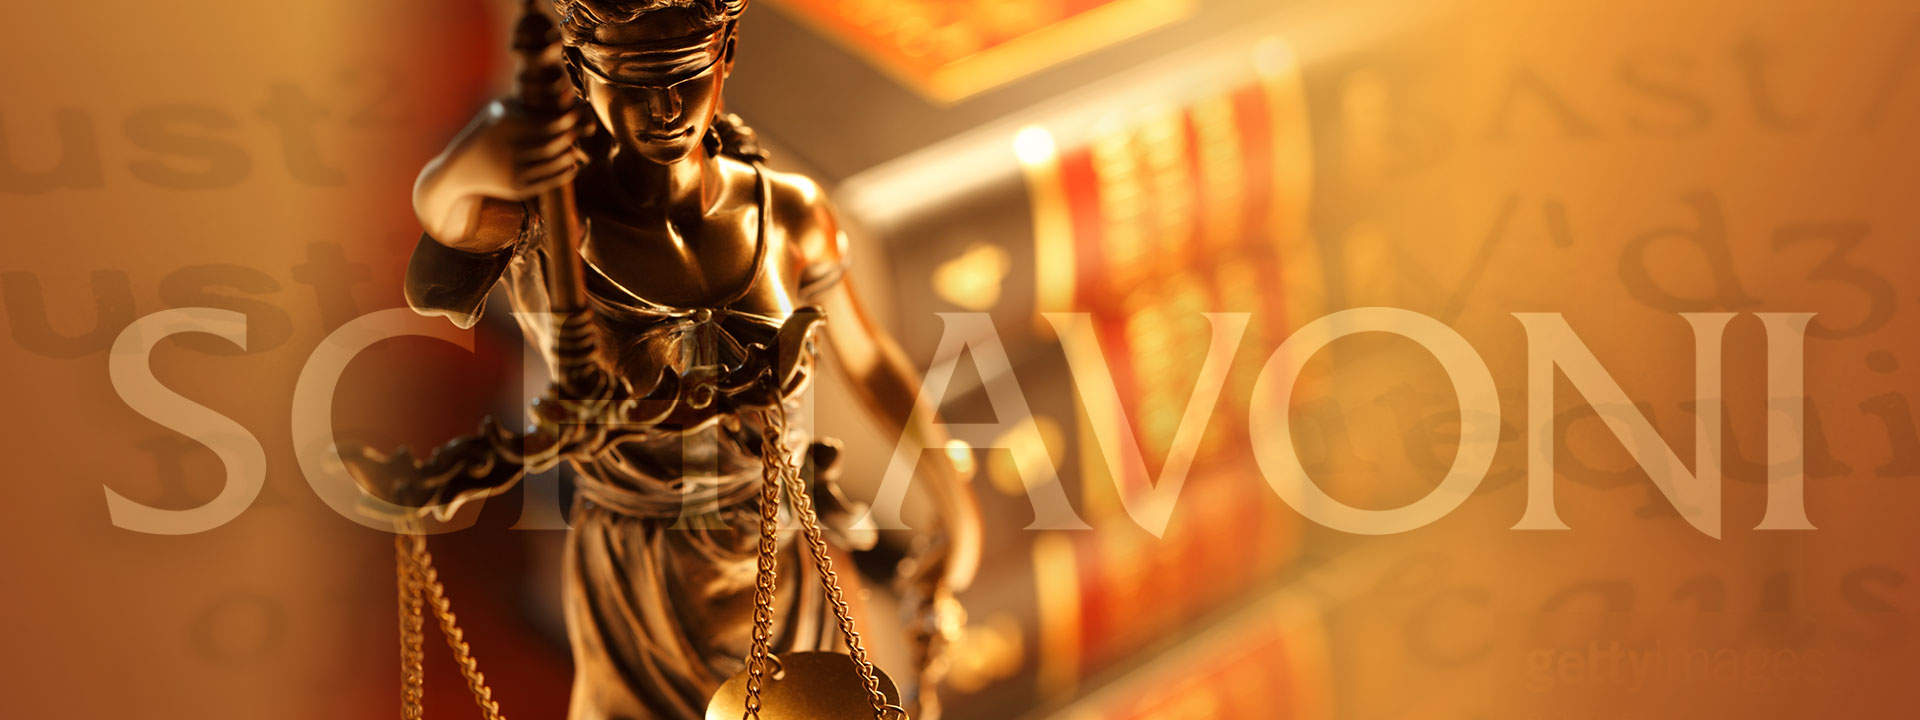 Schiavoni Law Firm | Schiavoni, Schiavoni, Bush & Muldowney Co., LPA